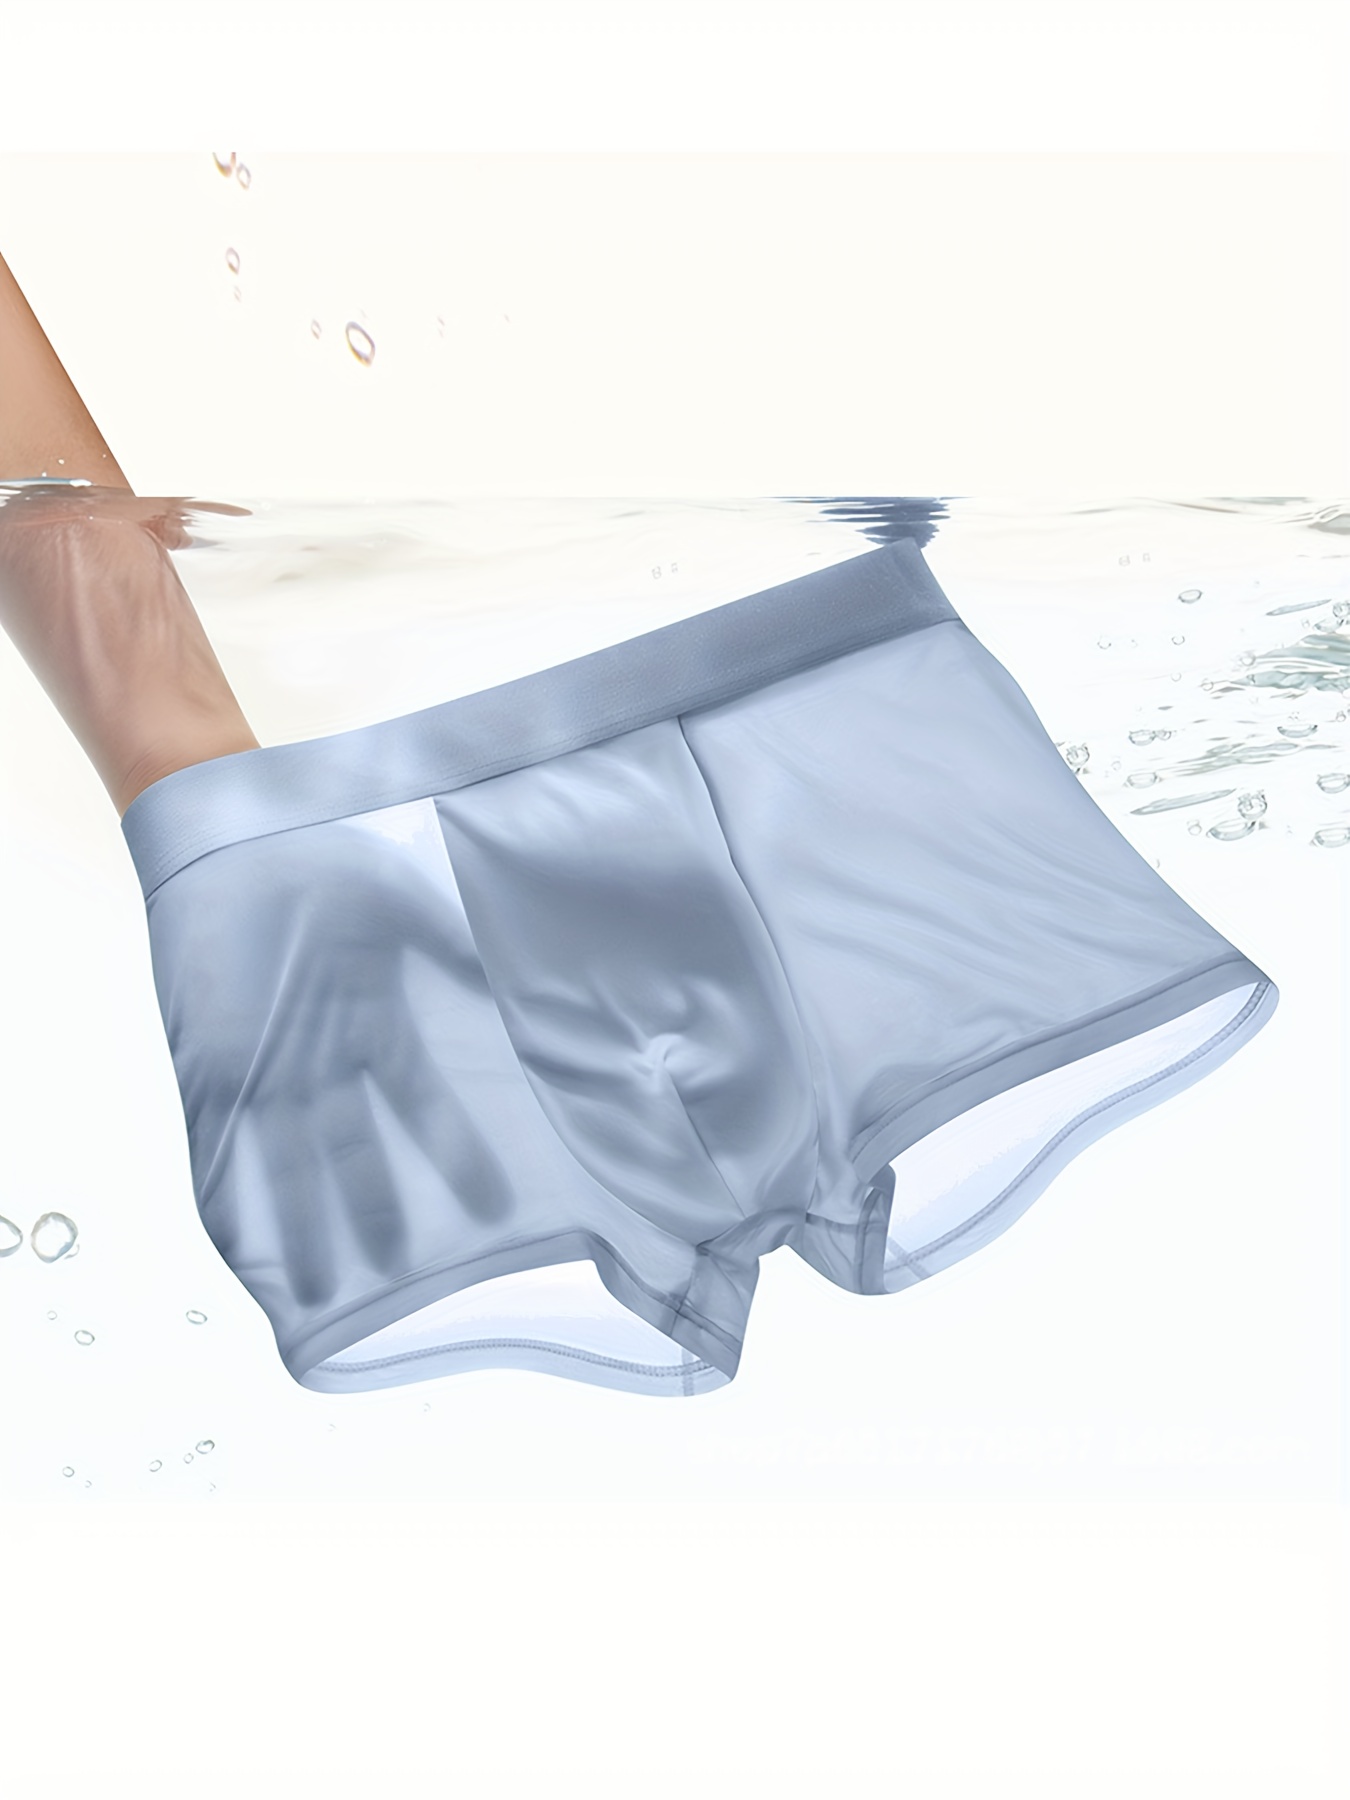 The New Ice Silk Seamless Underwear Women's Cotton Crotch Boxer